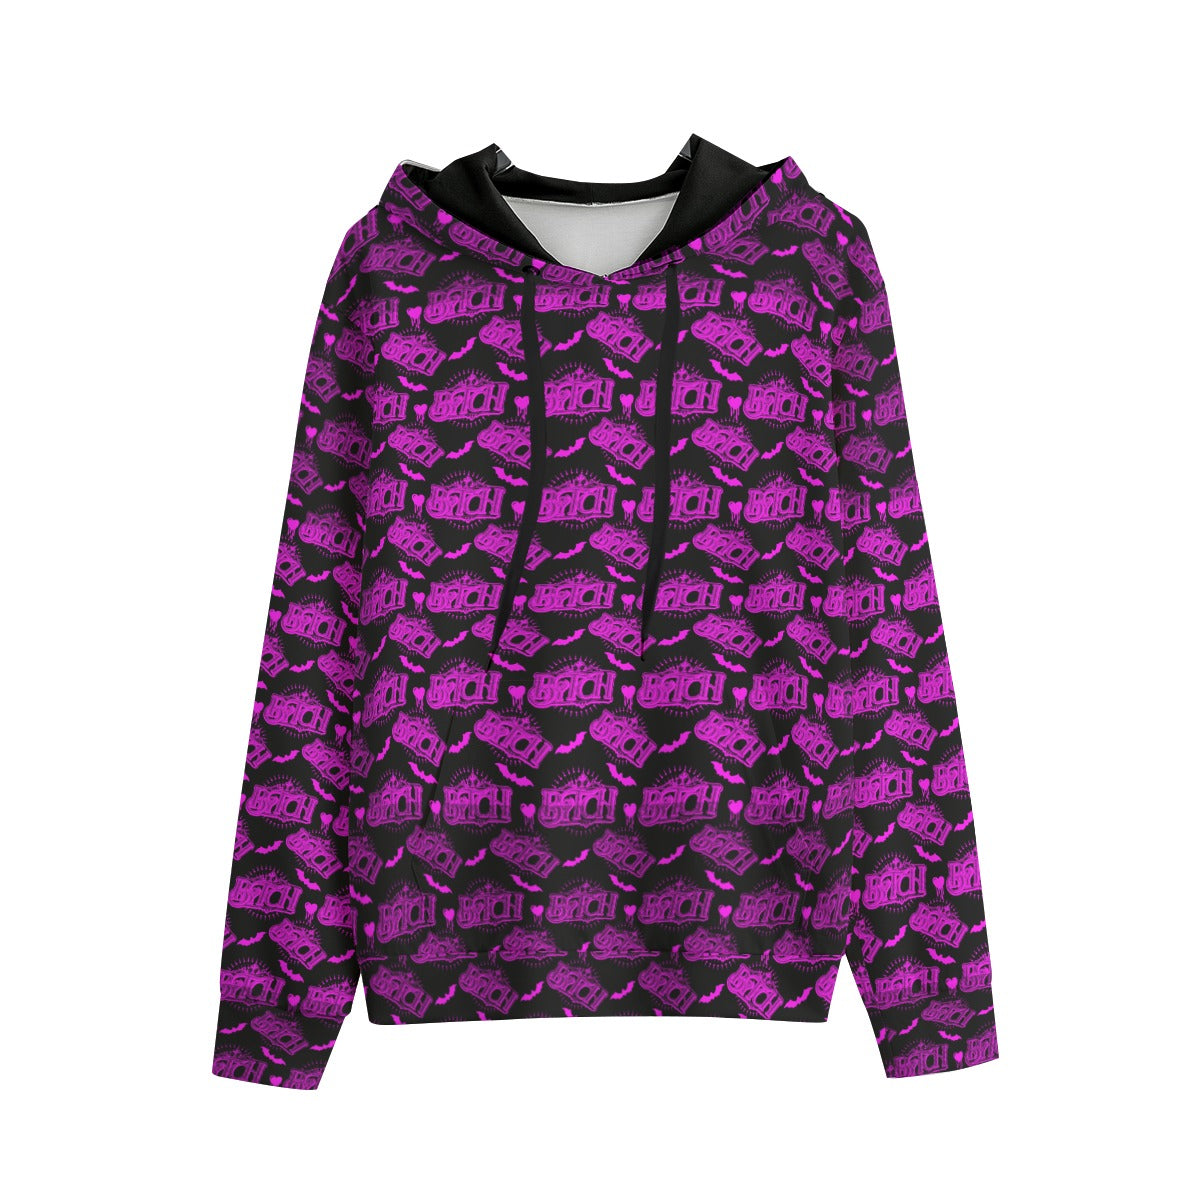 Bit*h Purple Unisex Pullover Hoodie | 310GSM Cotton